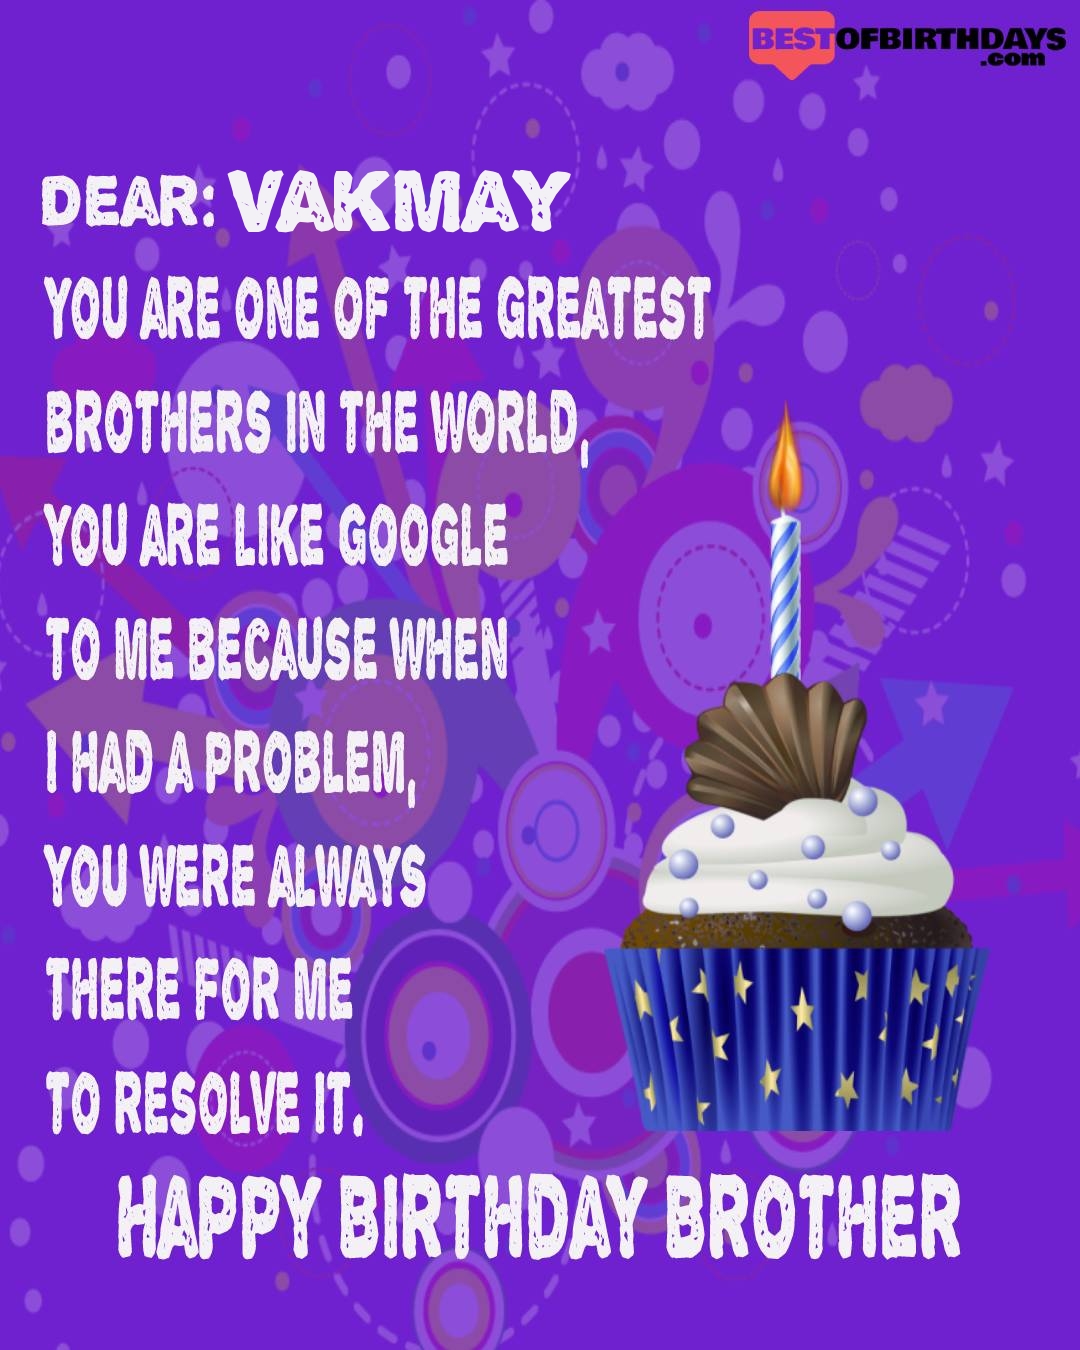 Happy birthday vakmay bhai brother bro